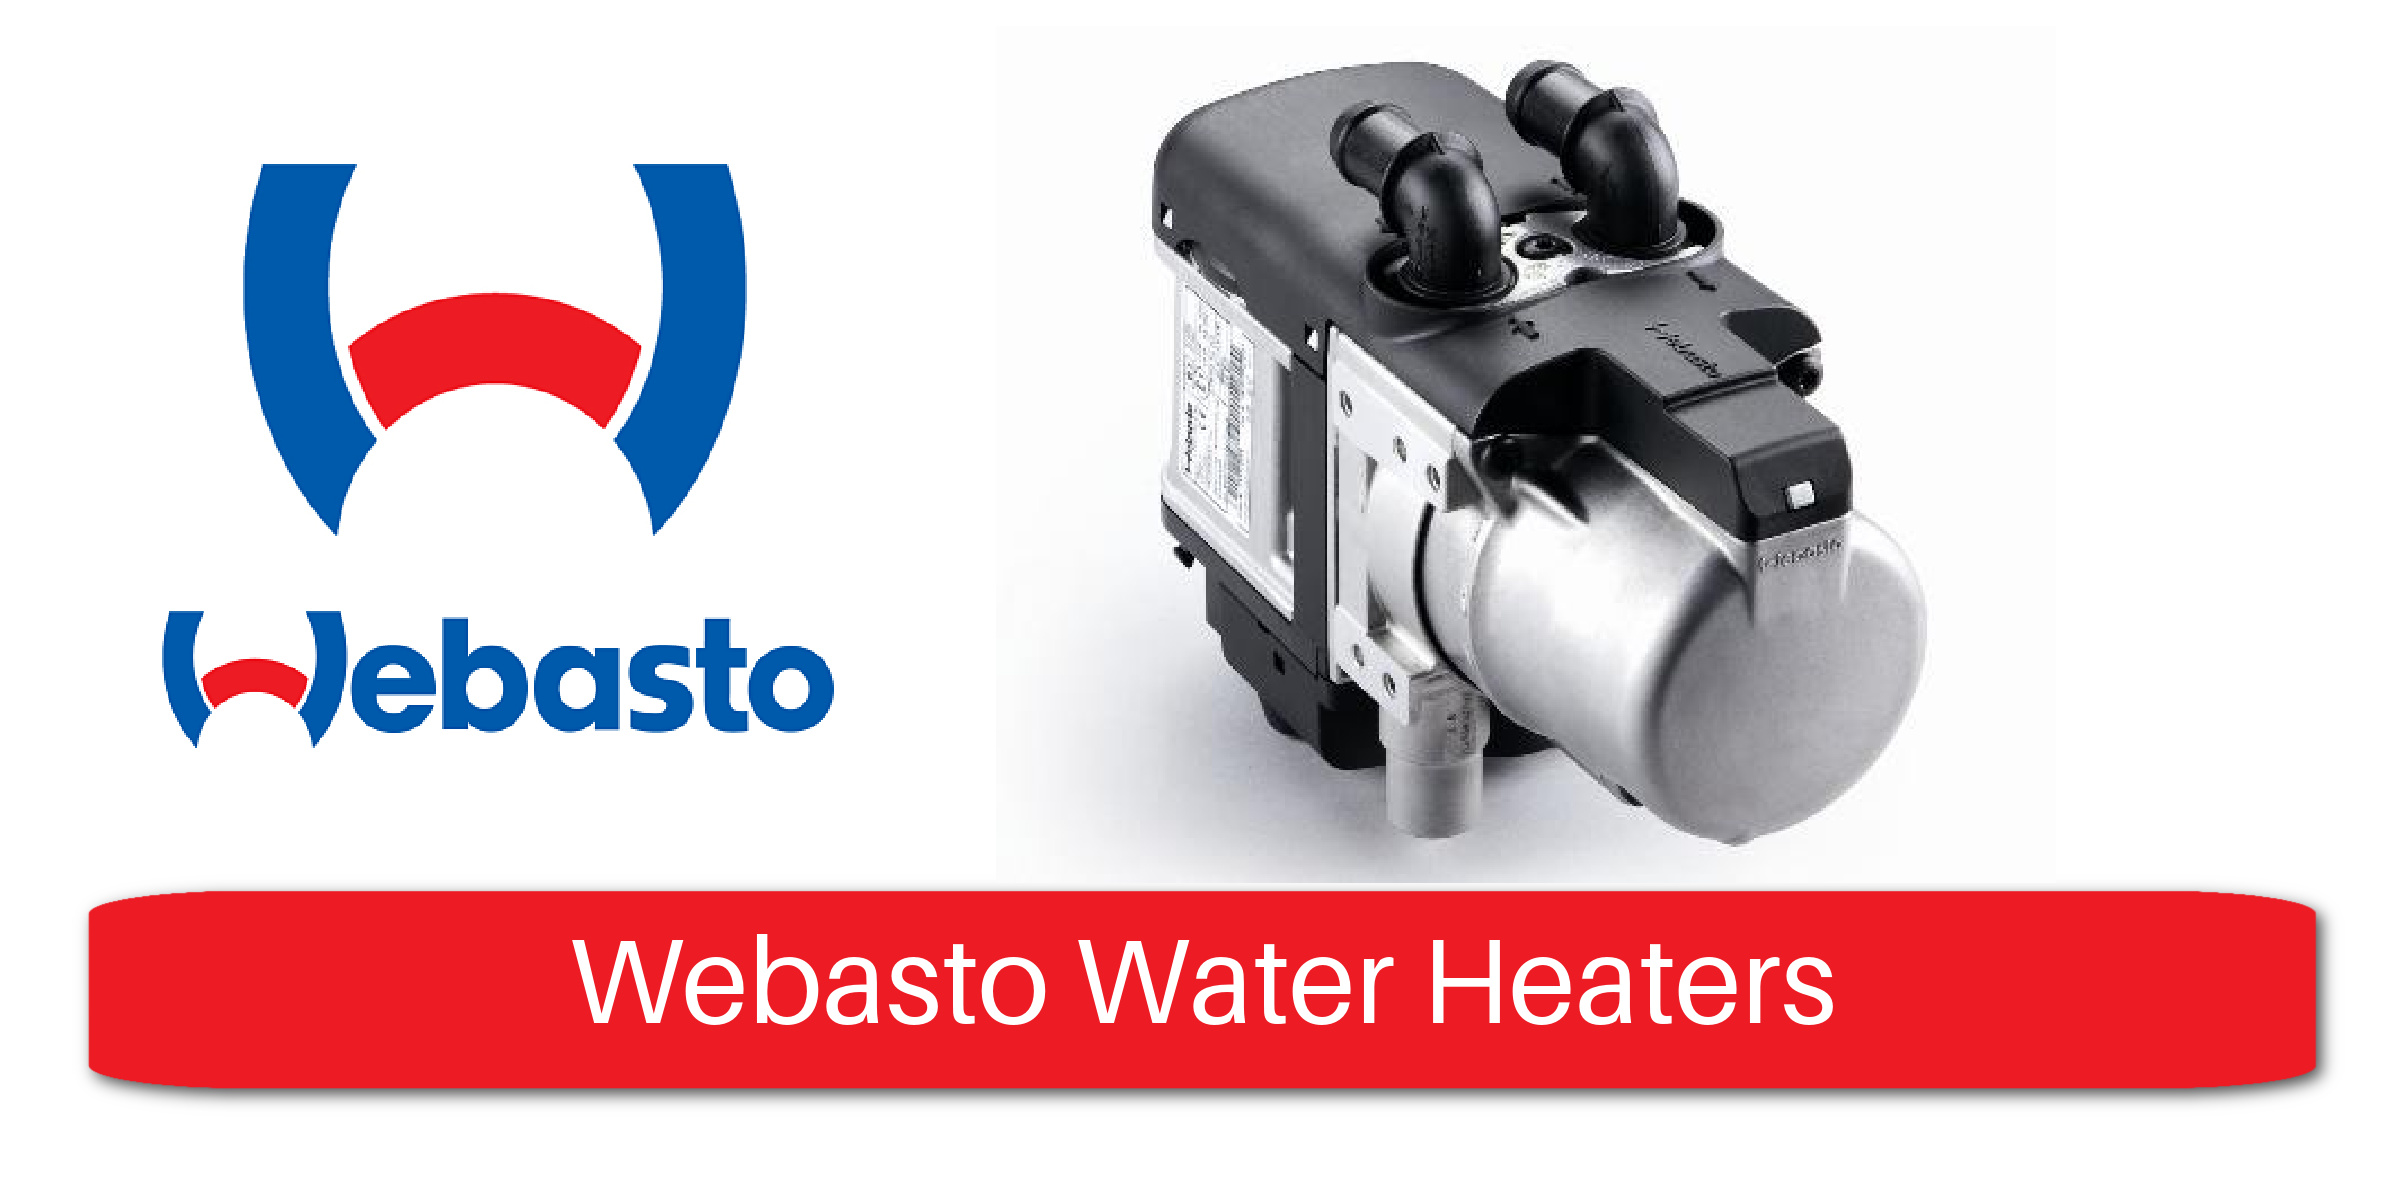 Webasto Water Heaters